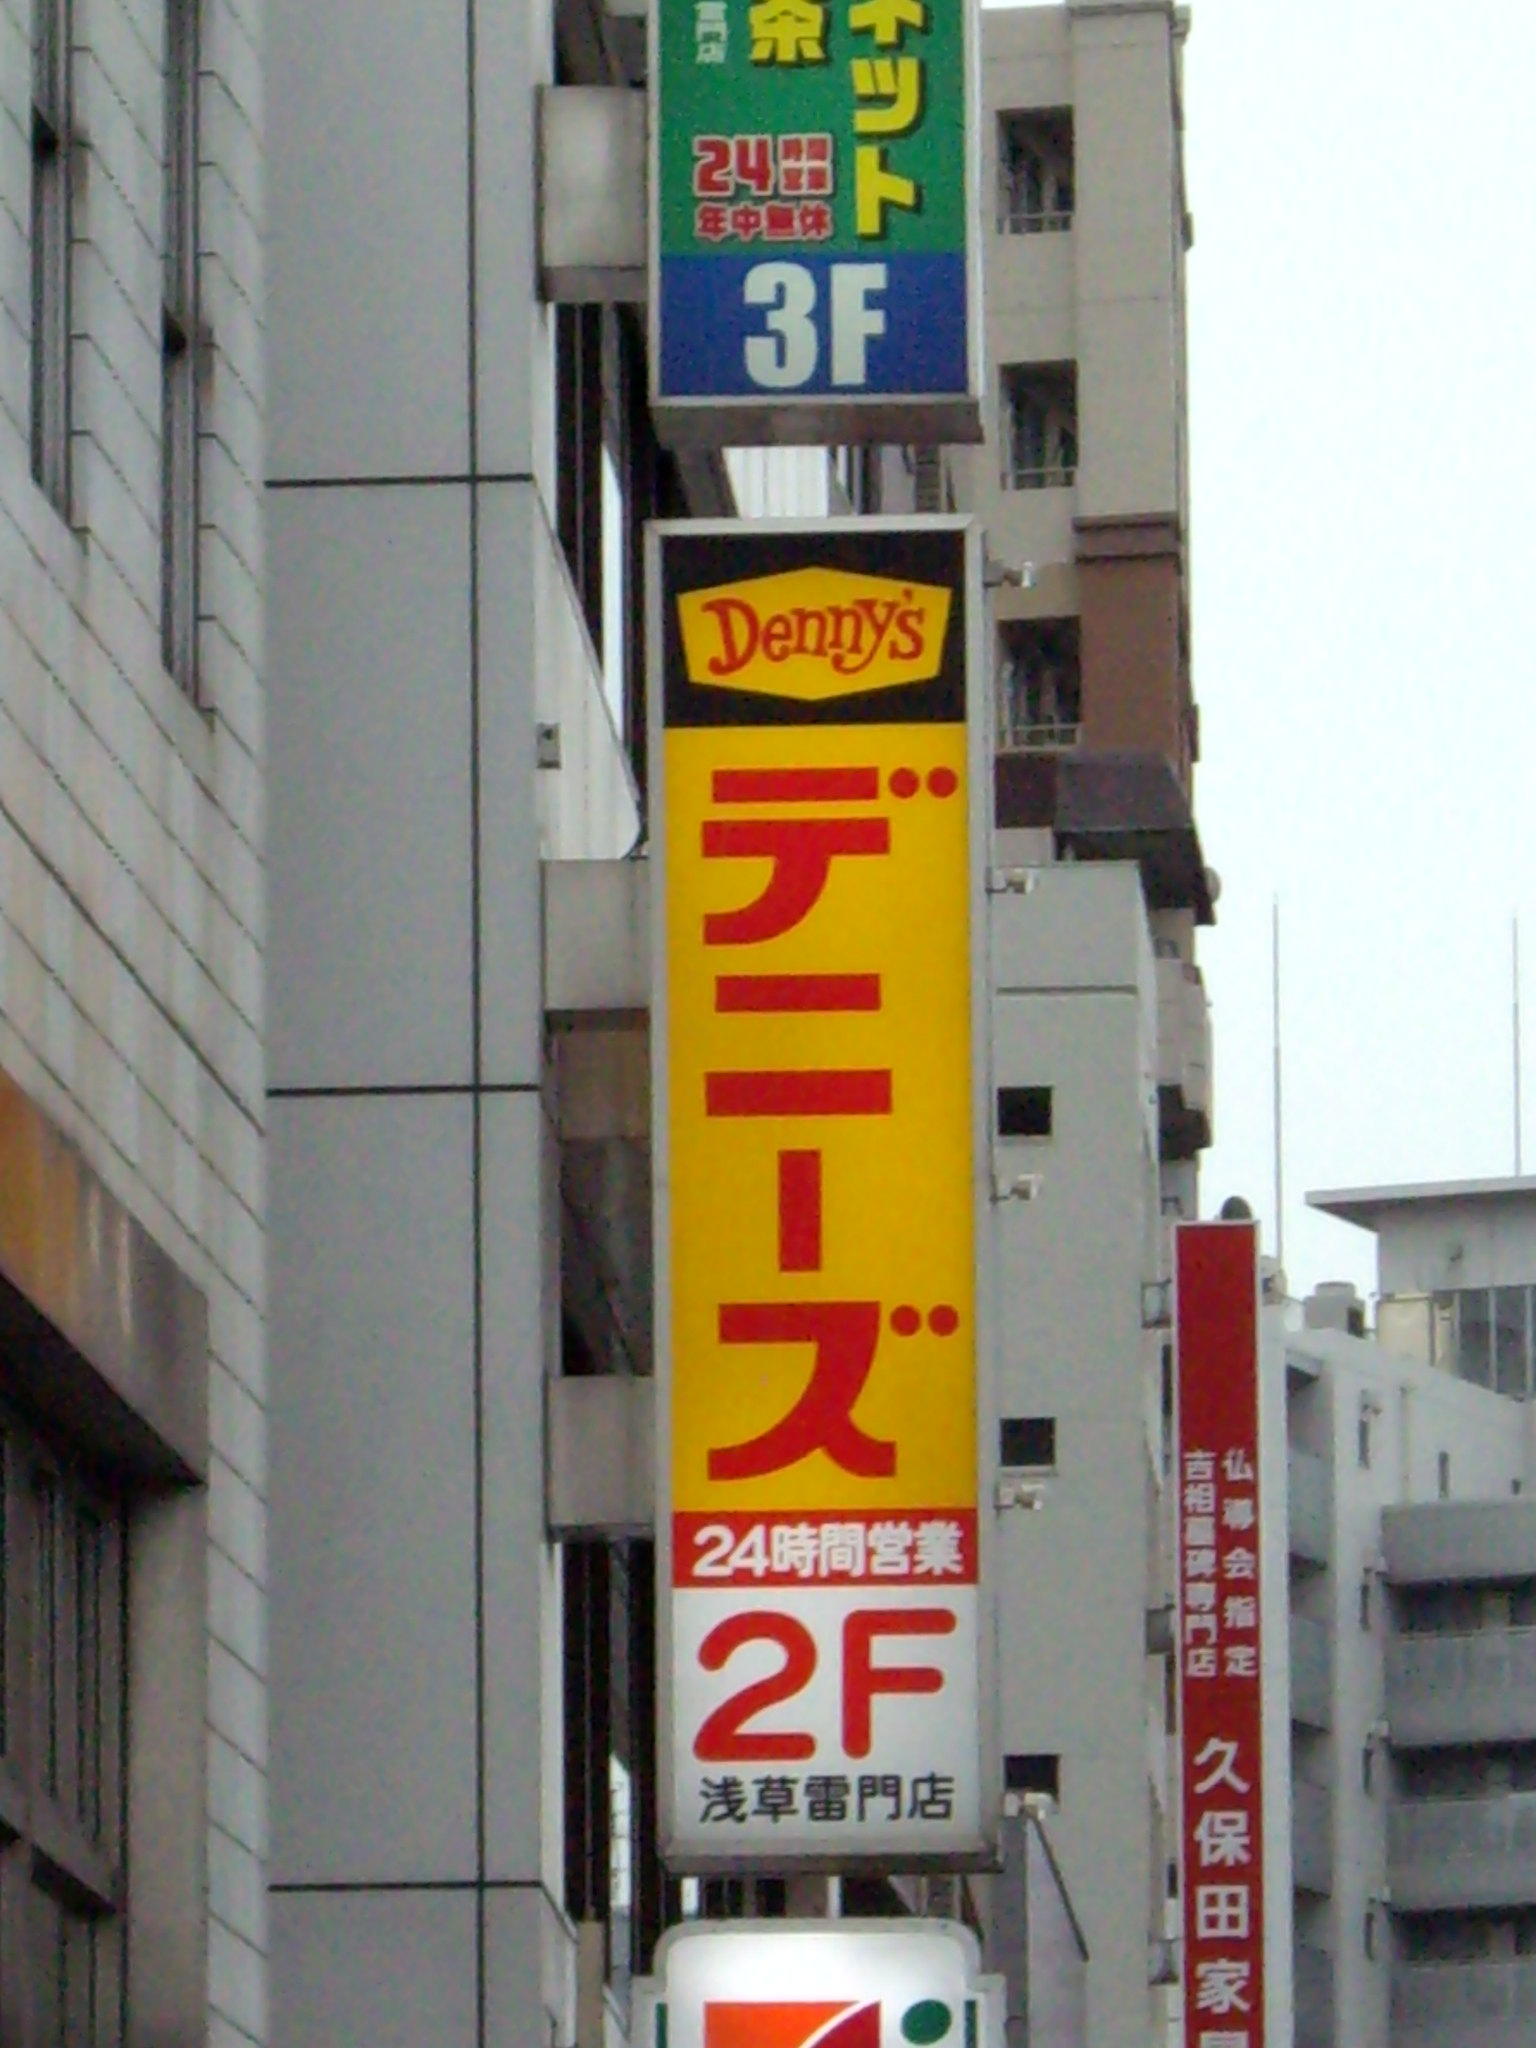 Katakana in Use